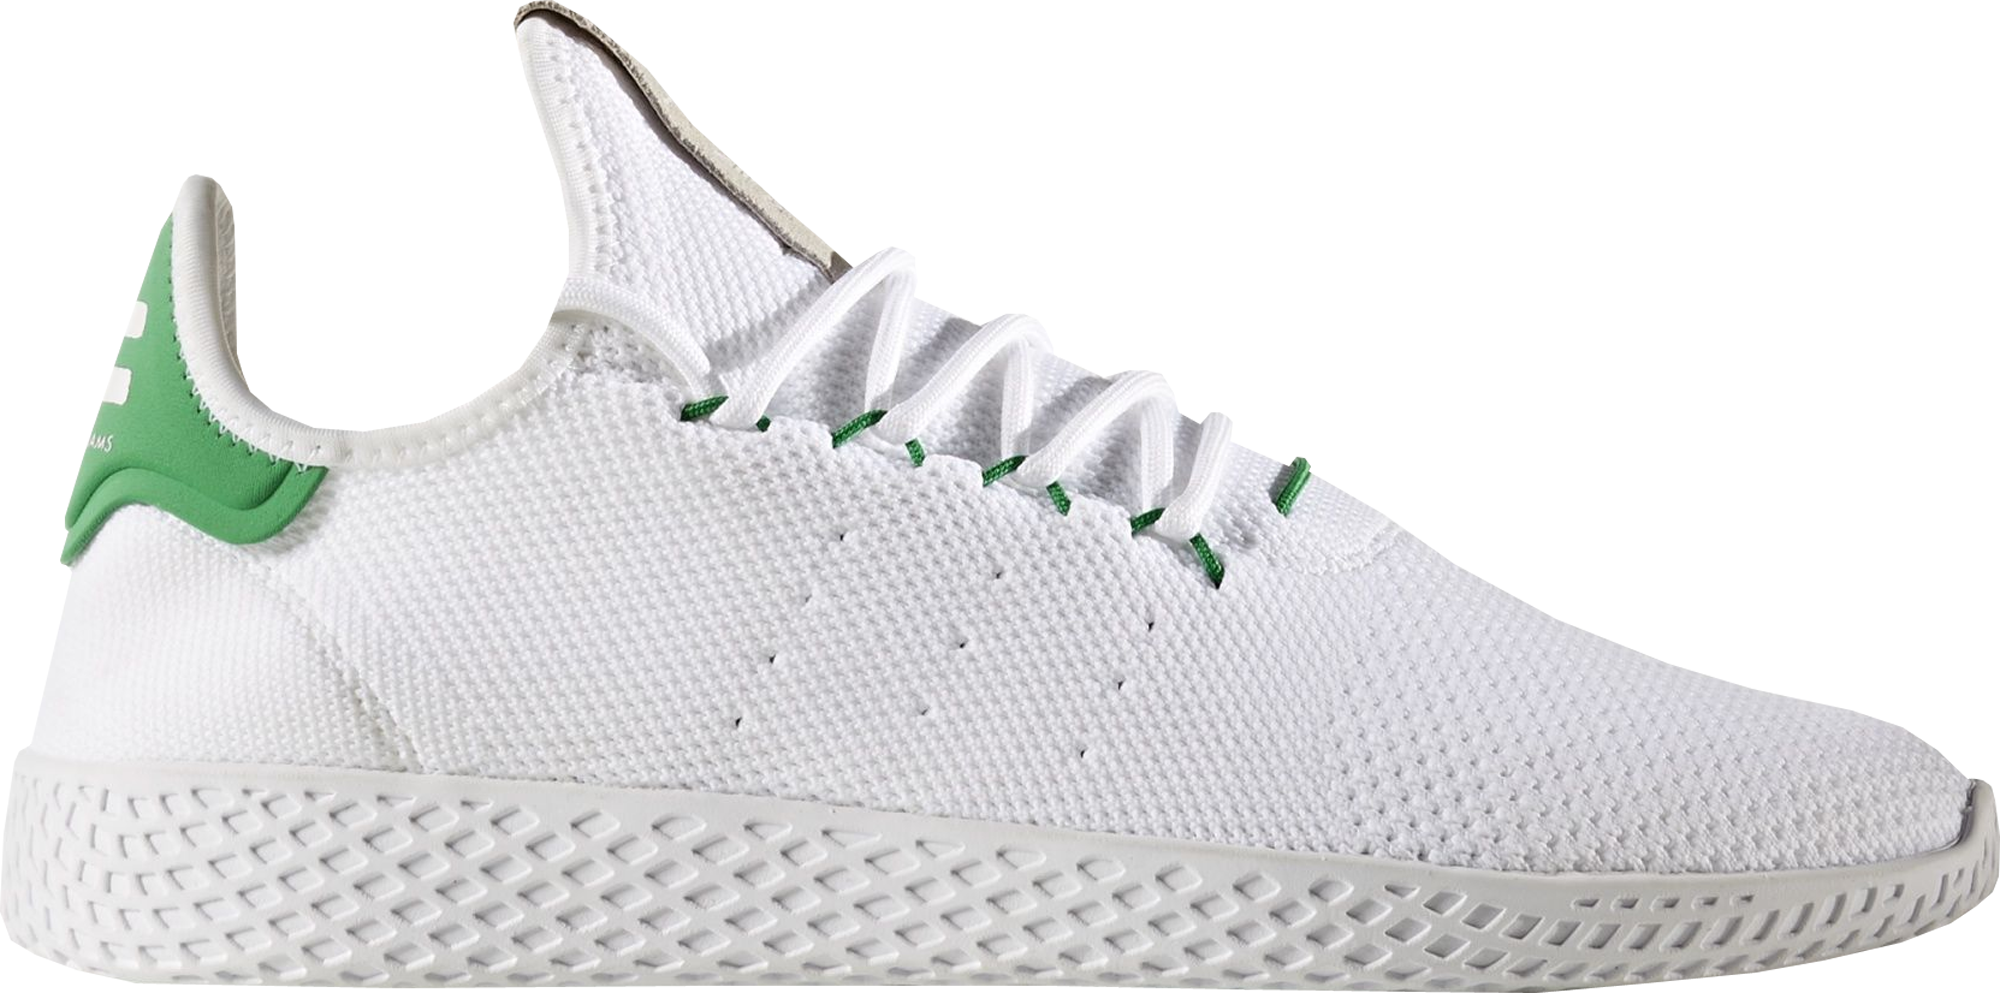 Pharrell Williams x adidas Tennis Hu White Green - StockX News